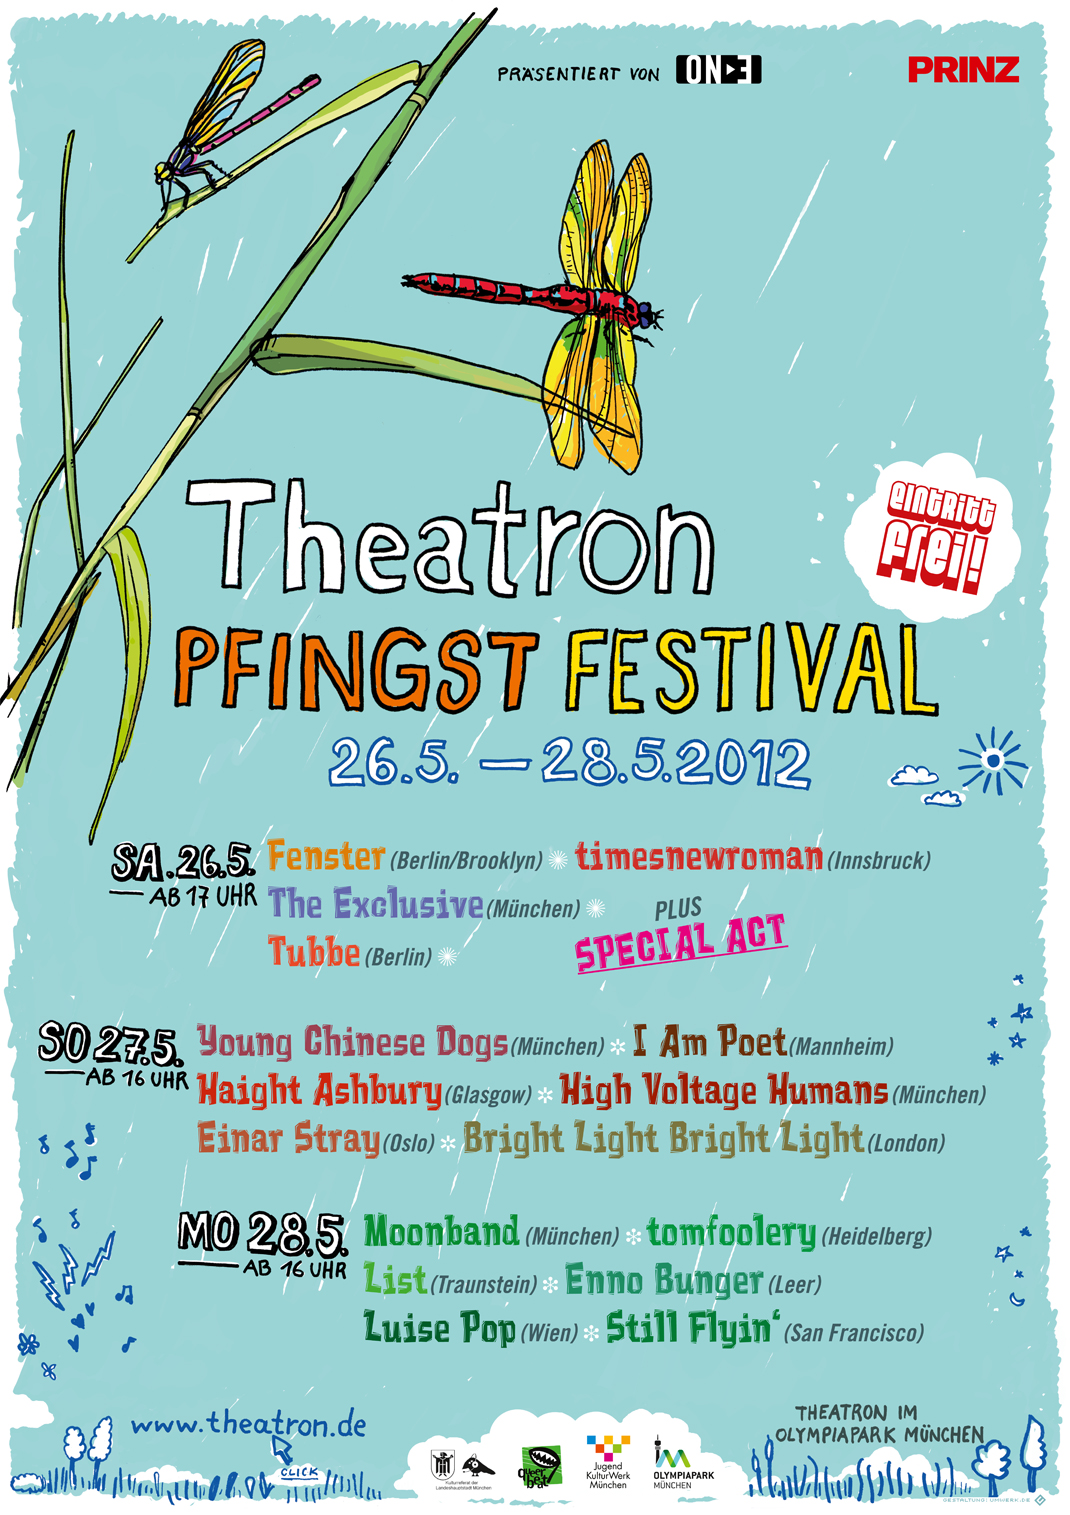 Pentecost Music Festival / Theatron Pfingstfestival 2012